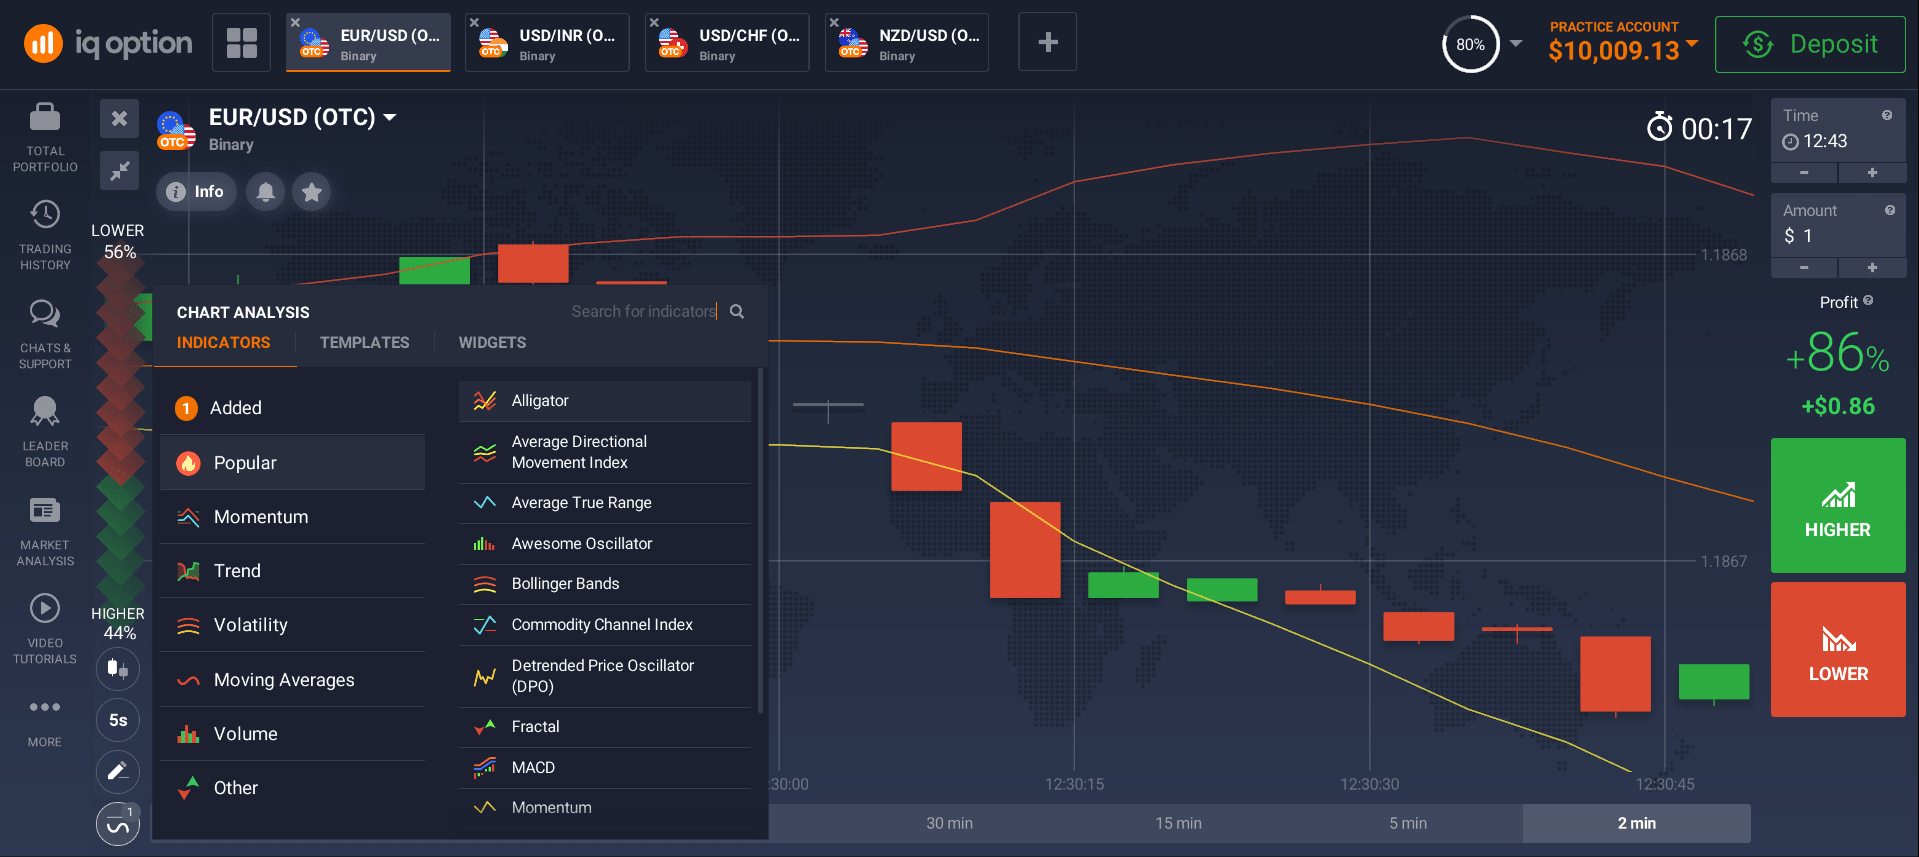 Popular indicators for chart analysis